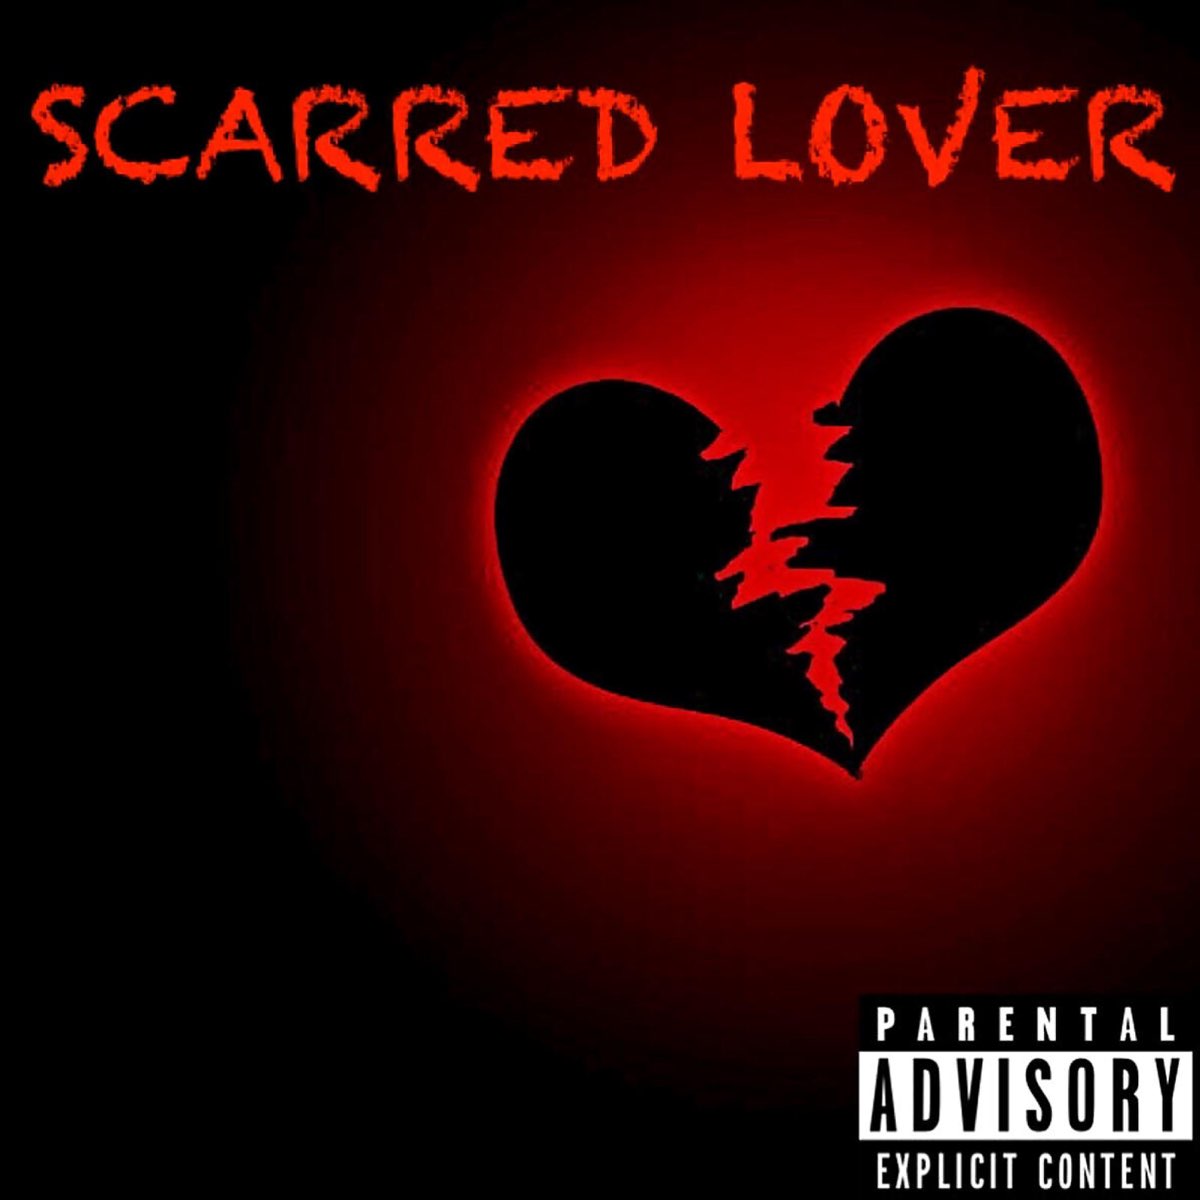 Scare l. Scary Love. Love scars 4.